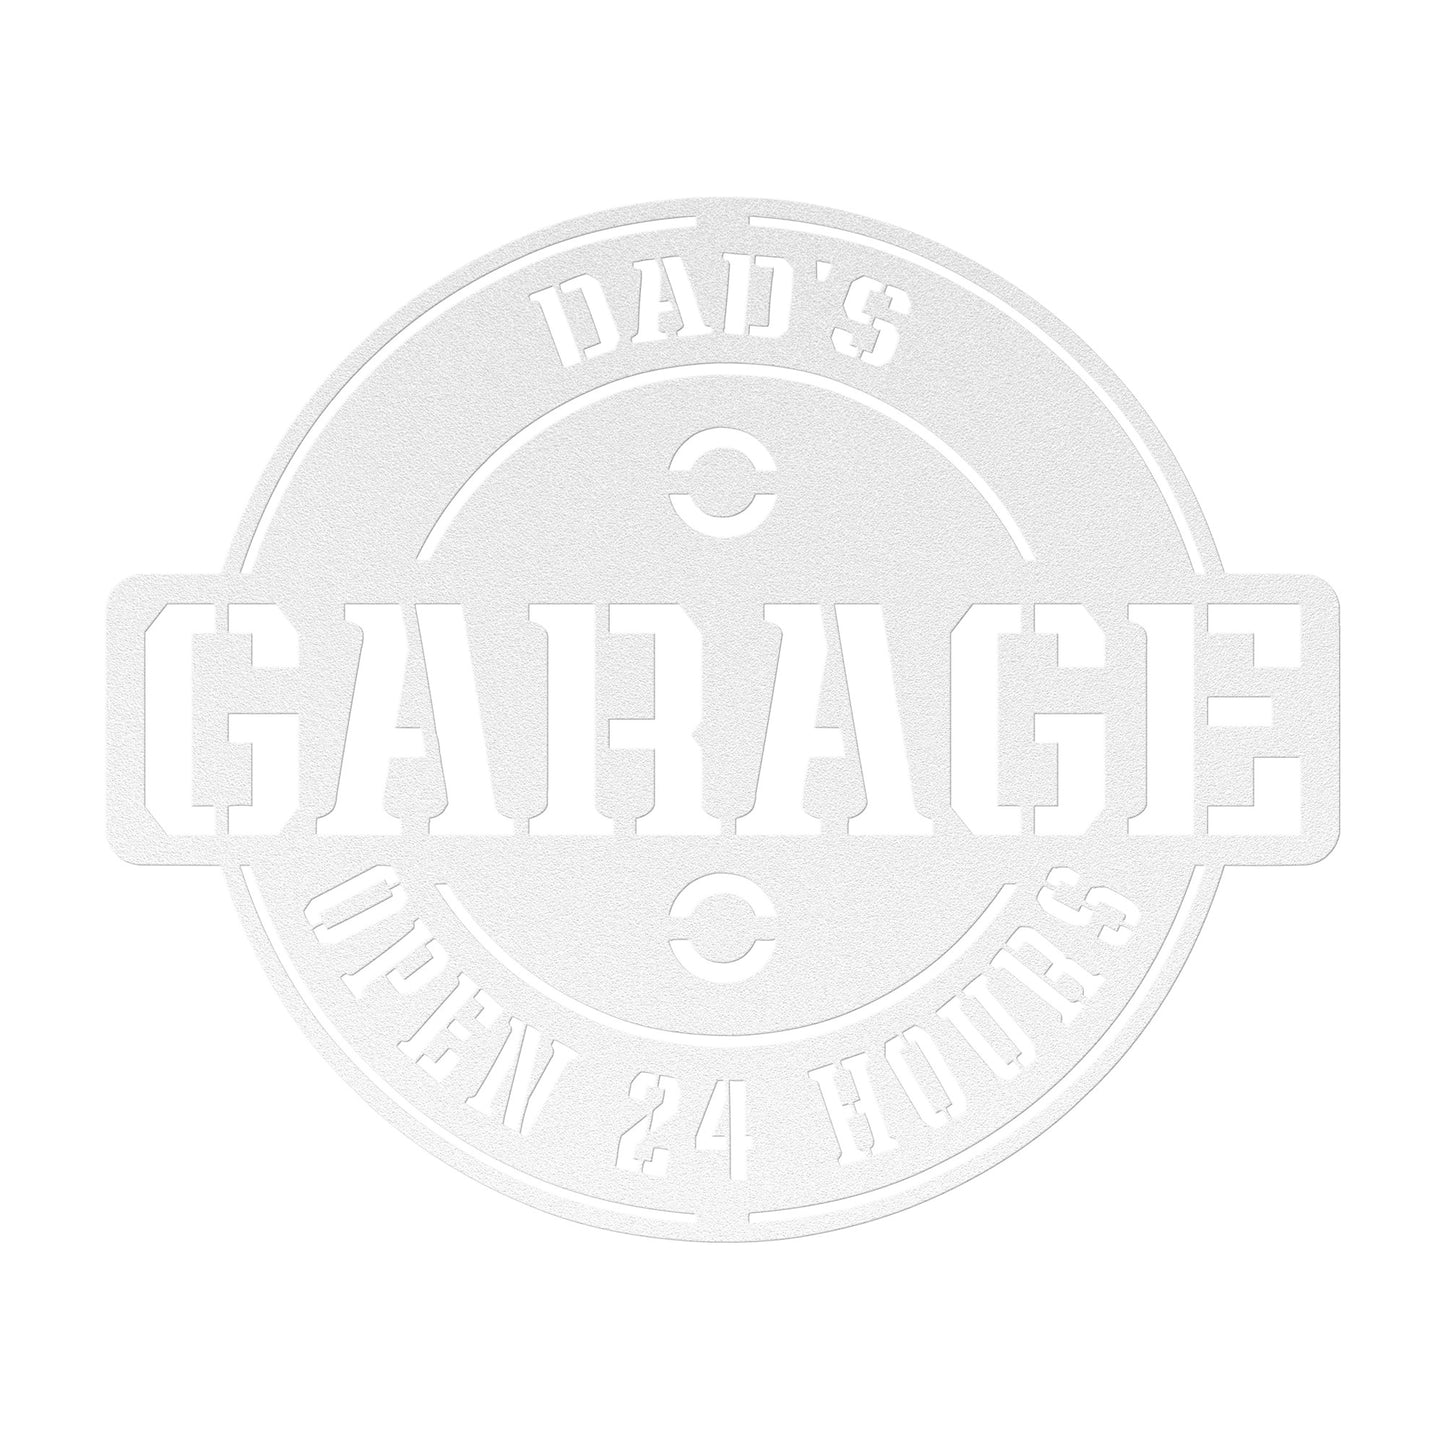 Personalized Metal Name Garage Sign Custom Plaque Wall Art Housewarming Est Year Man Cave Dad's Gift Mechanic Workshop American Car Pickup